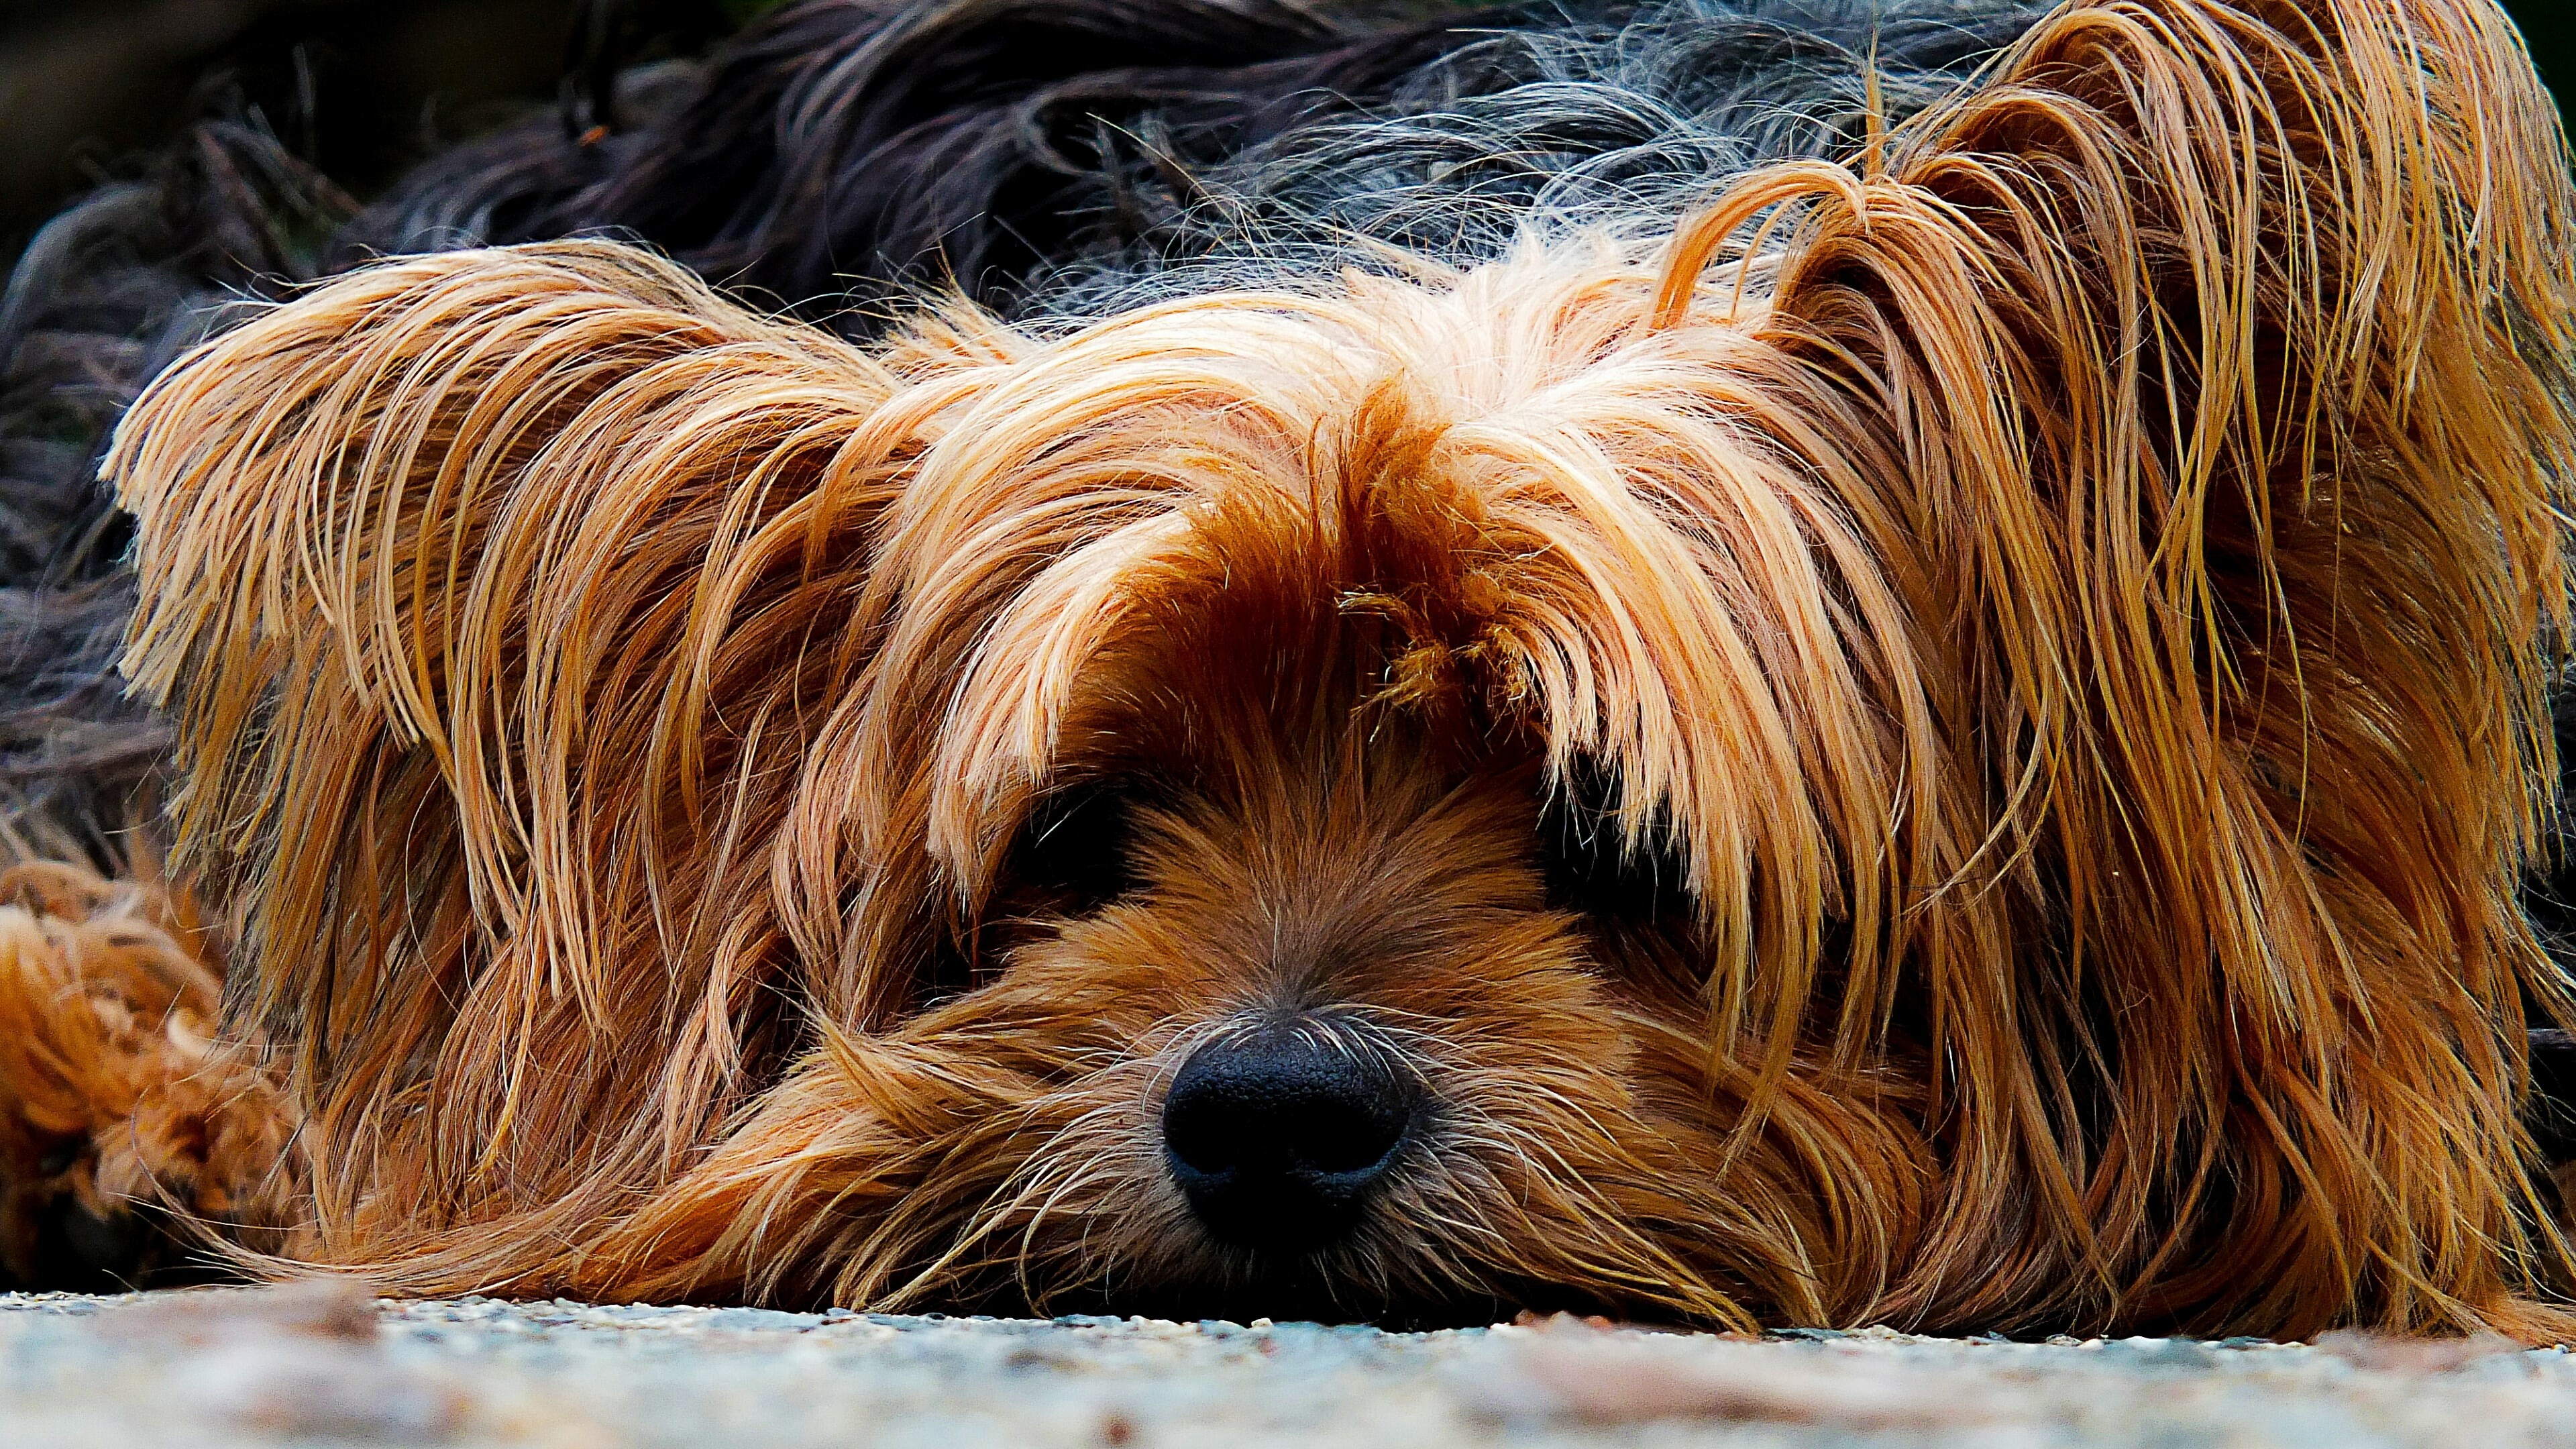 Yorkshire Terrier, 4K Ultra HD wallpaper, High-quality visuals, Stunning Yorkie, 3840x2160 4K Desktop